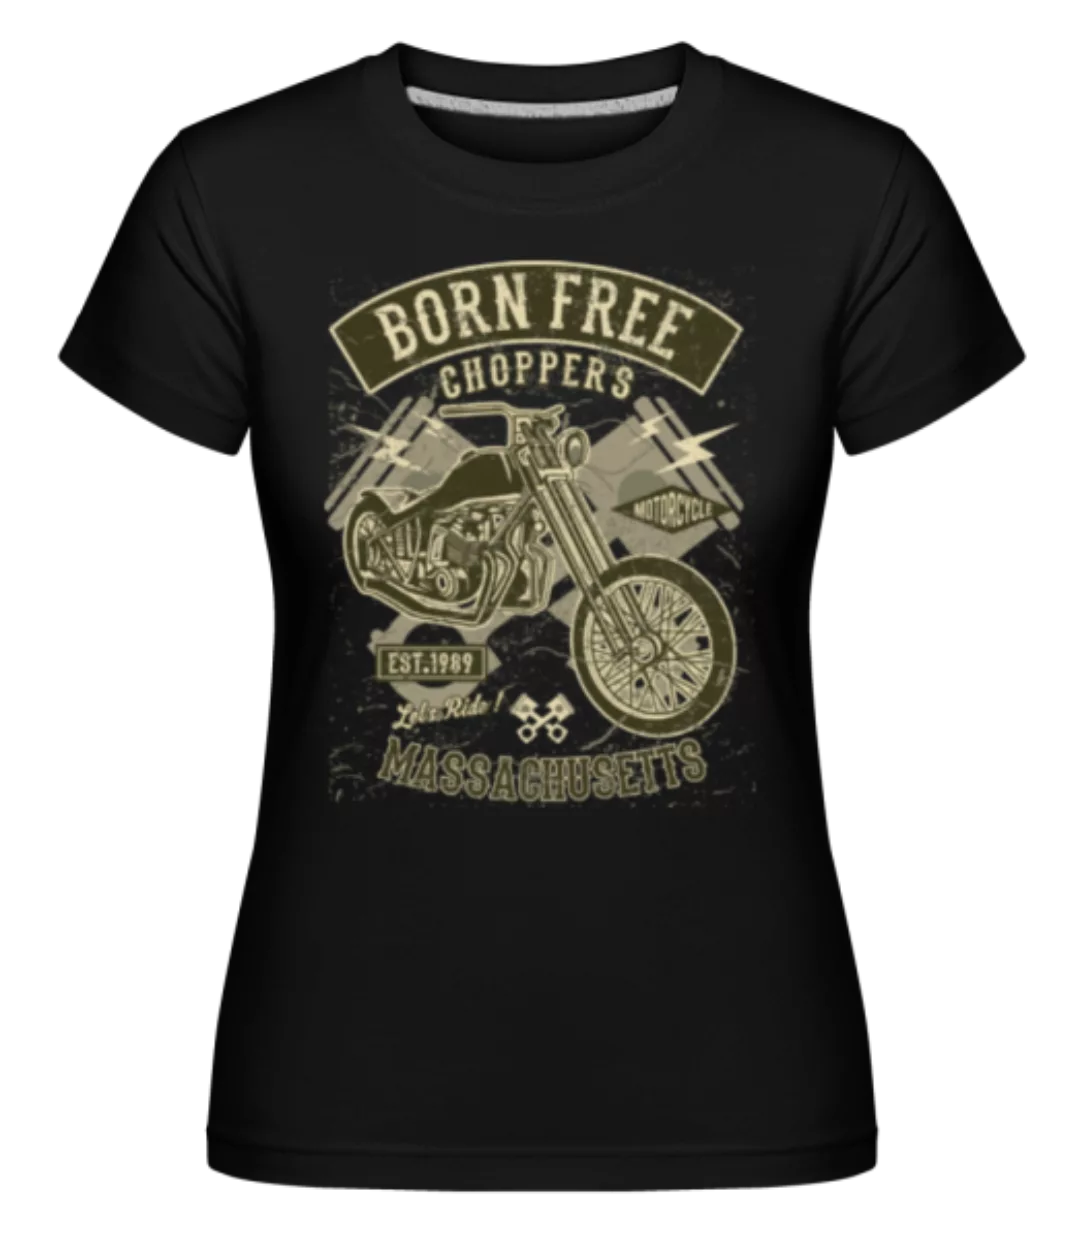 Born Free Choppers · Shirtinator Frauen T-Shirt günstig online kaufen